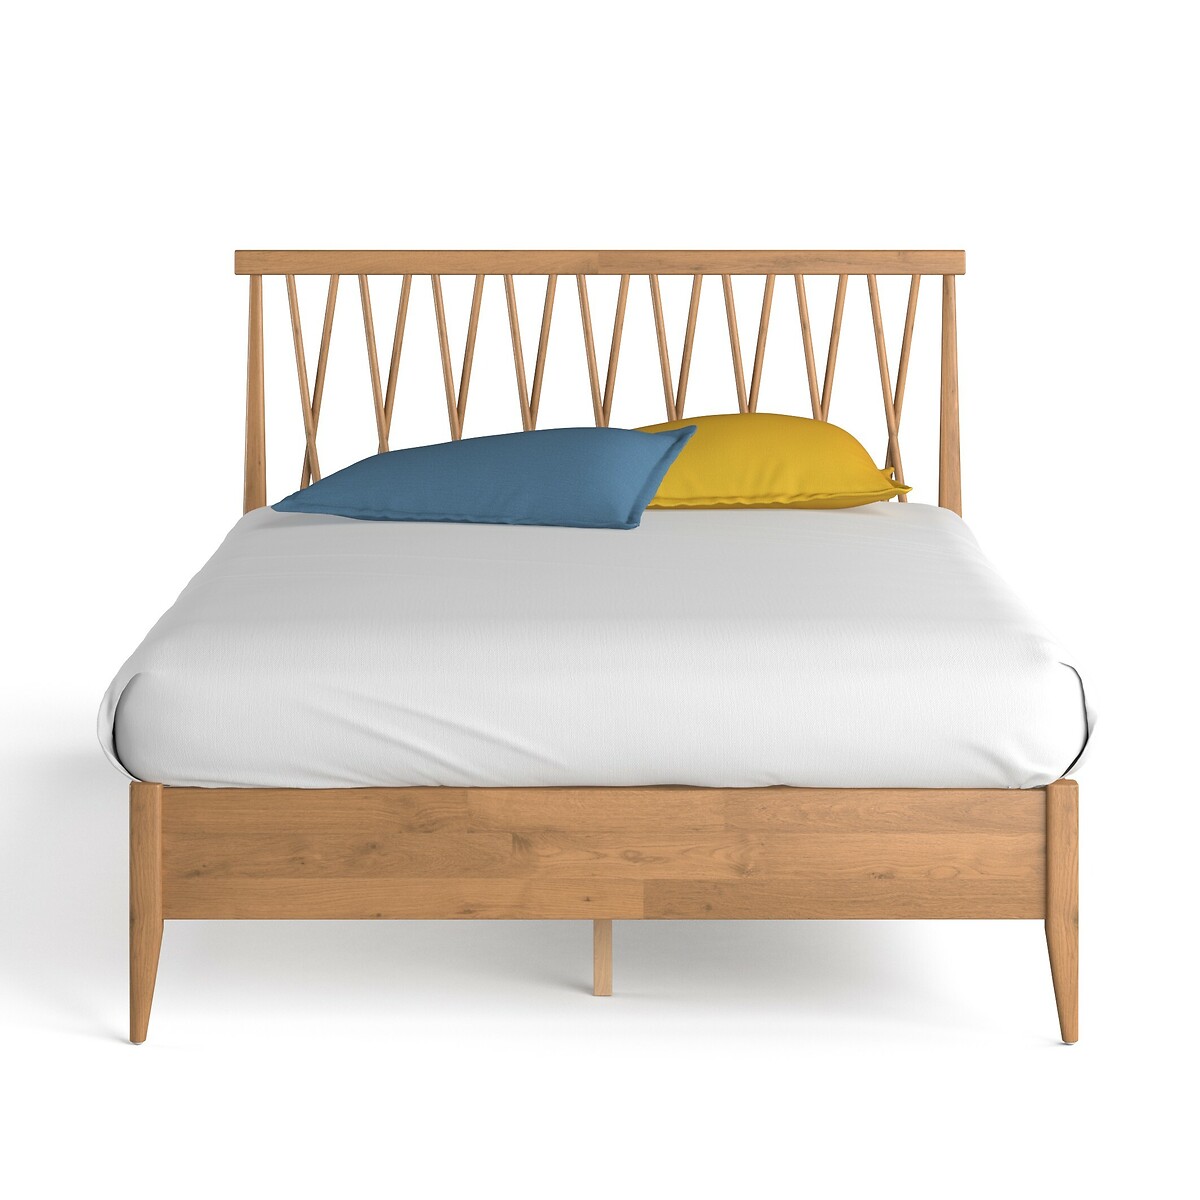 Кровать La Redoute сетка Quilda 140 x 190 см каштановый, размер 140 x 190 см - фото 1